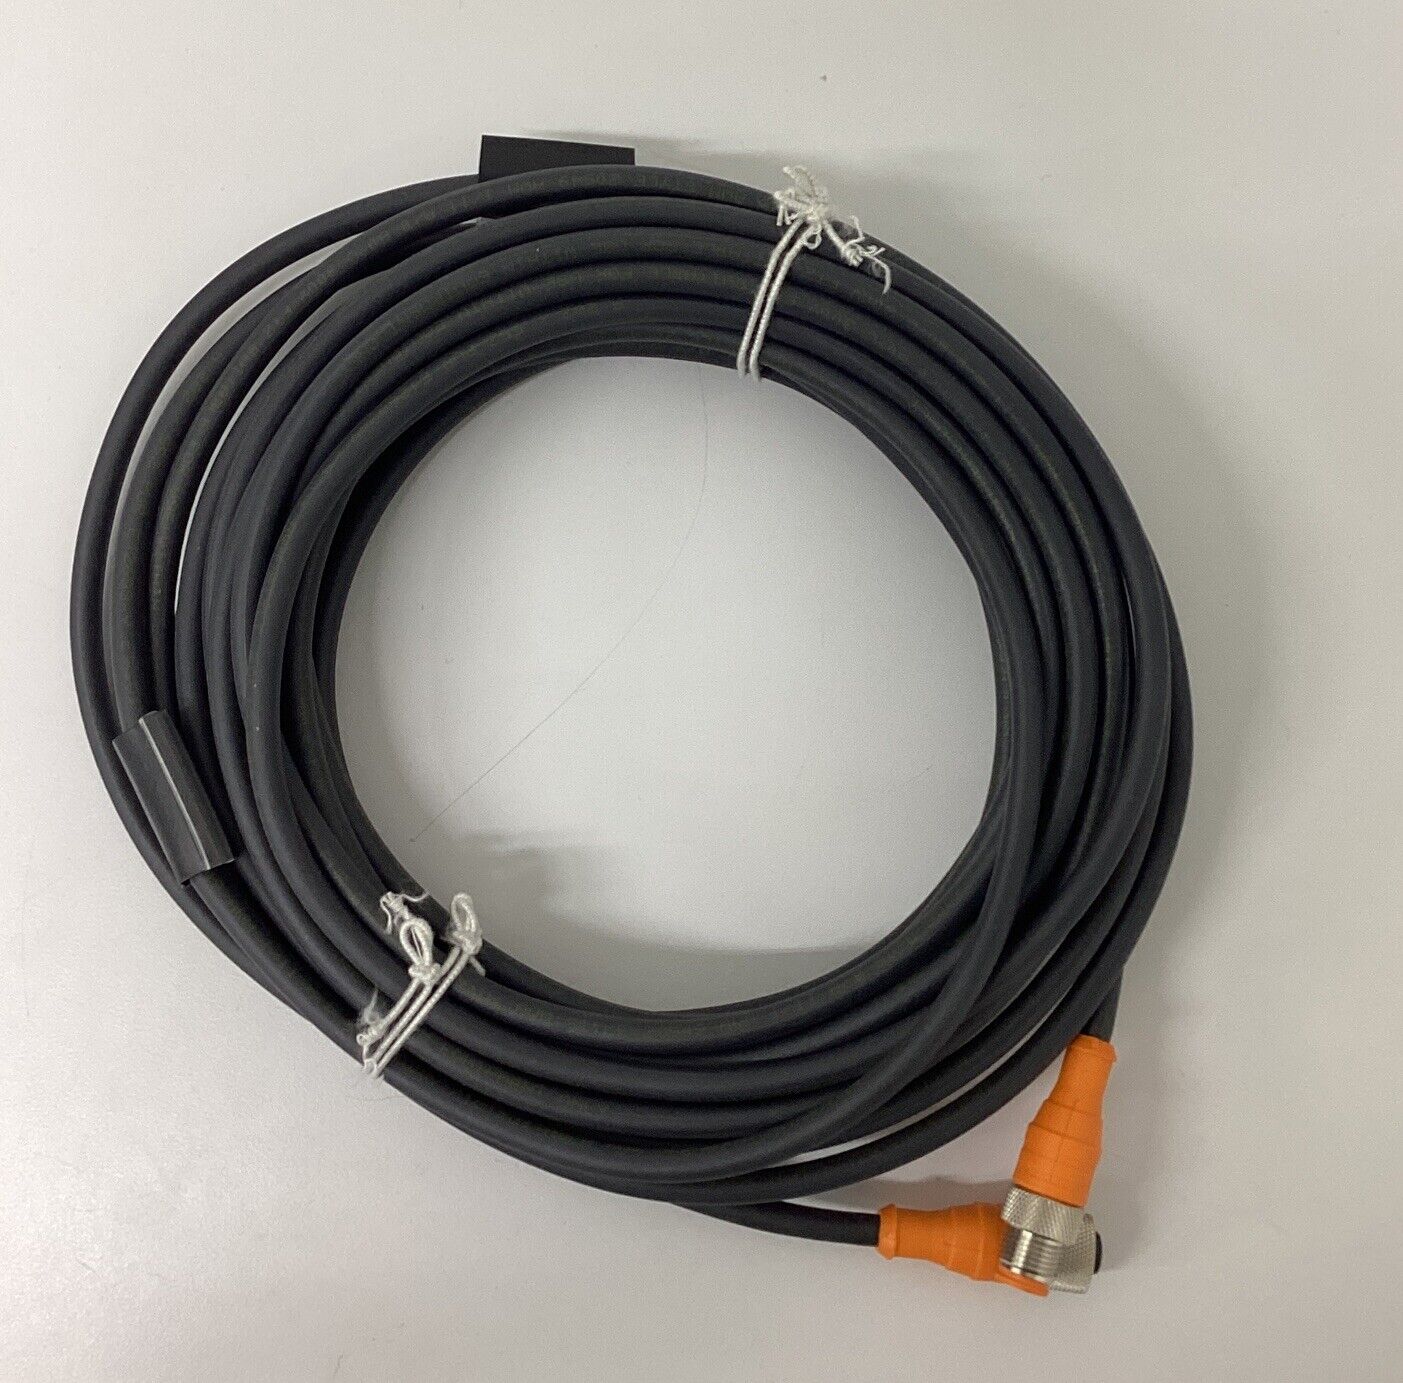 Lumberg Belden RST-8-RKT-8-282/10M  8-Pole Male/Female Cable 10M (CL342)